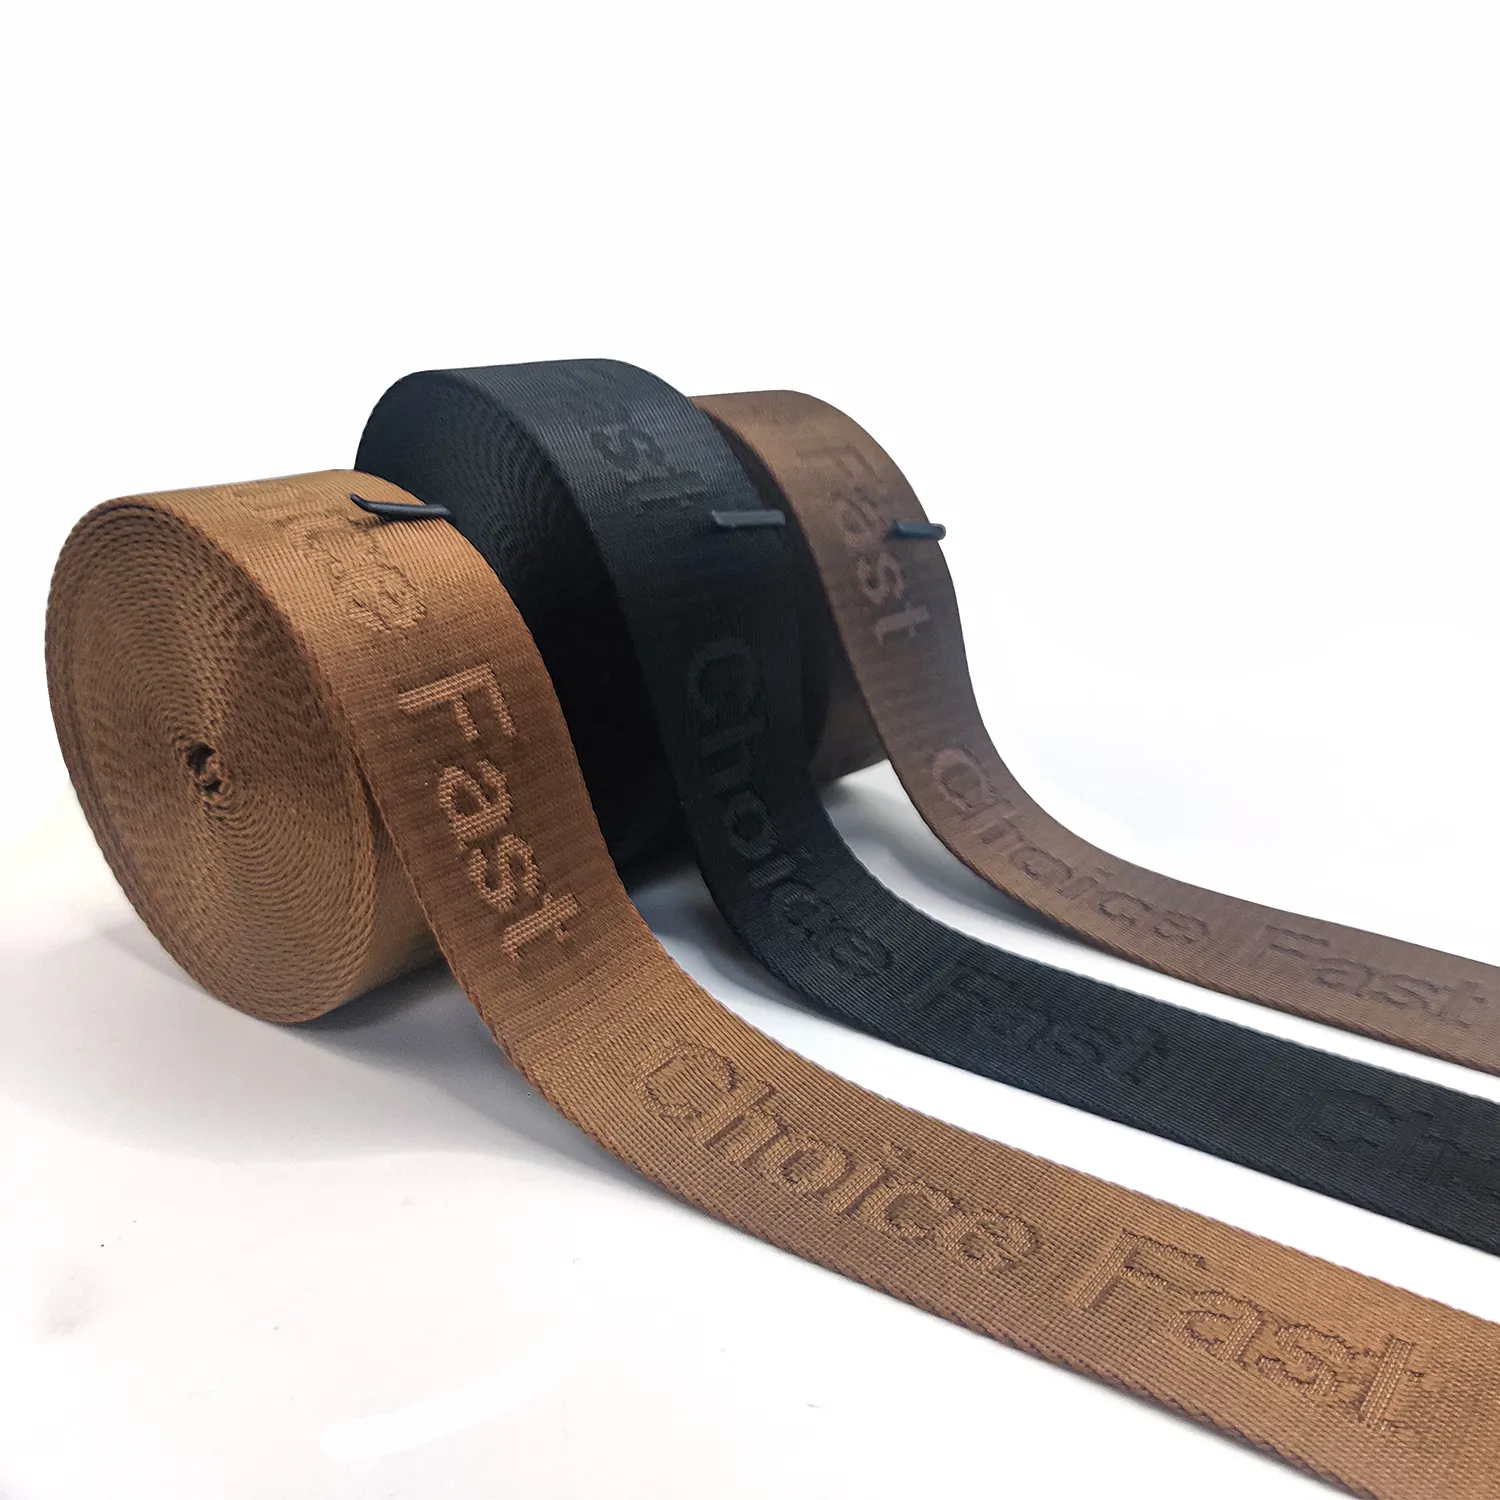 lettered jacquard nylon webbing tape customised handbag straps with logo 25mm jacquard webbing jacquard webbing for bag strap